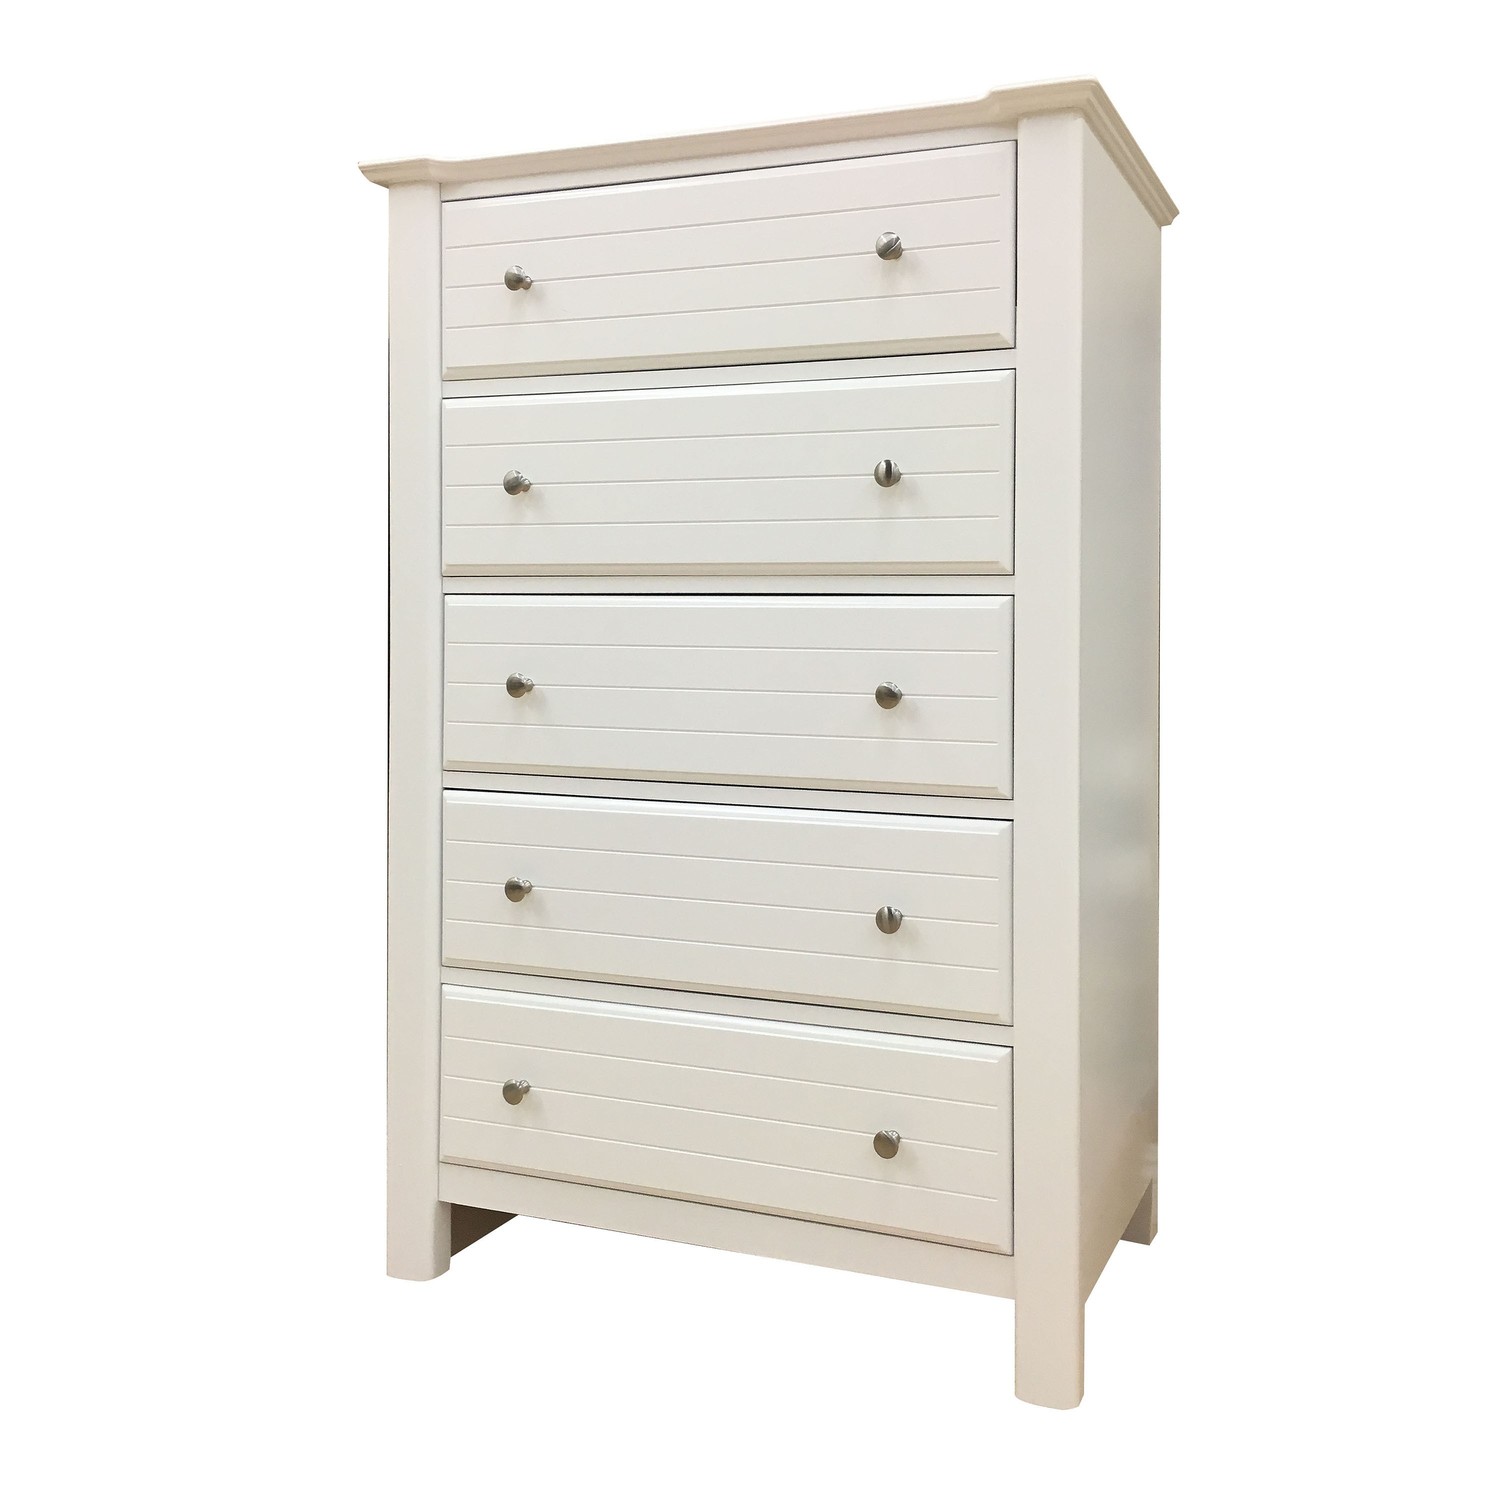 52" White Wood 5 Drawer Chest Dresser